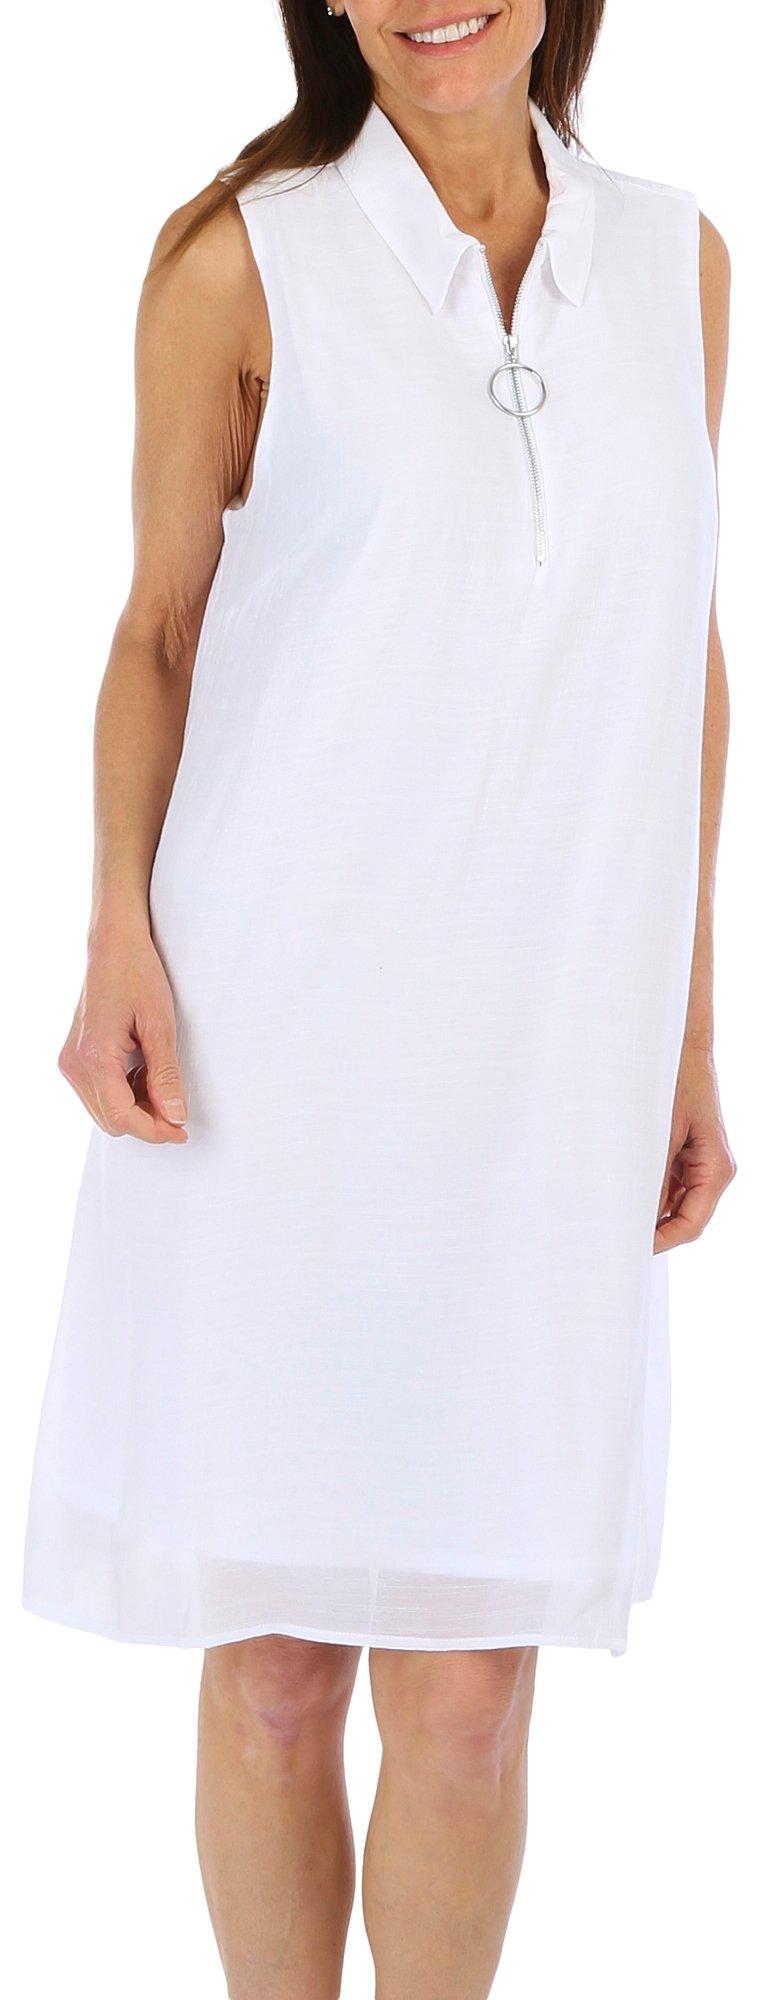 Harper 241 Womens Solid 1/4 Zip O-Ring Sleeveless Dress